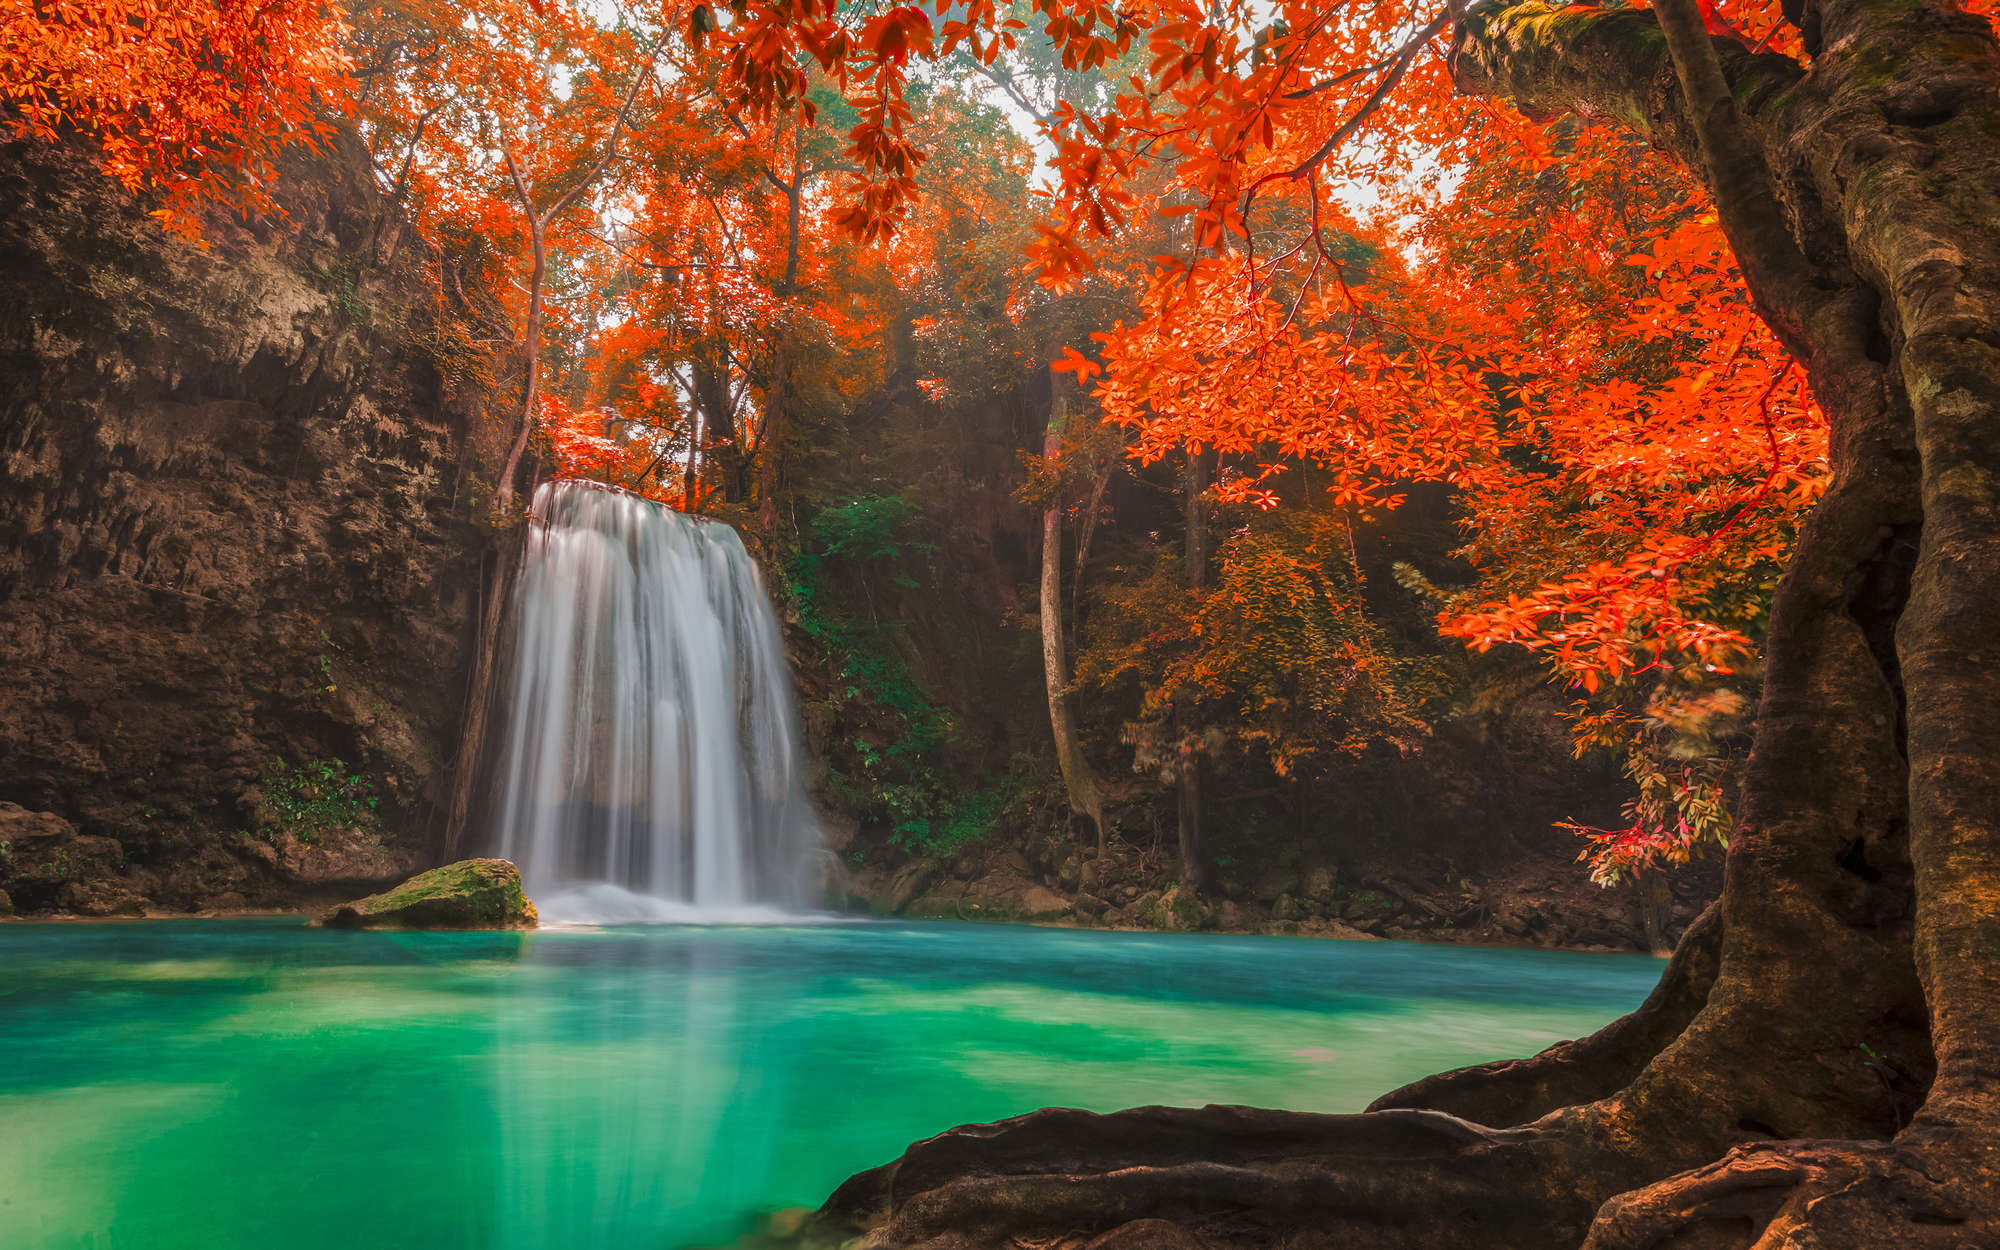             Natur Fototapete Wasserfall im Wald – Premium Glattvlies
        